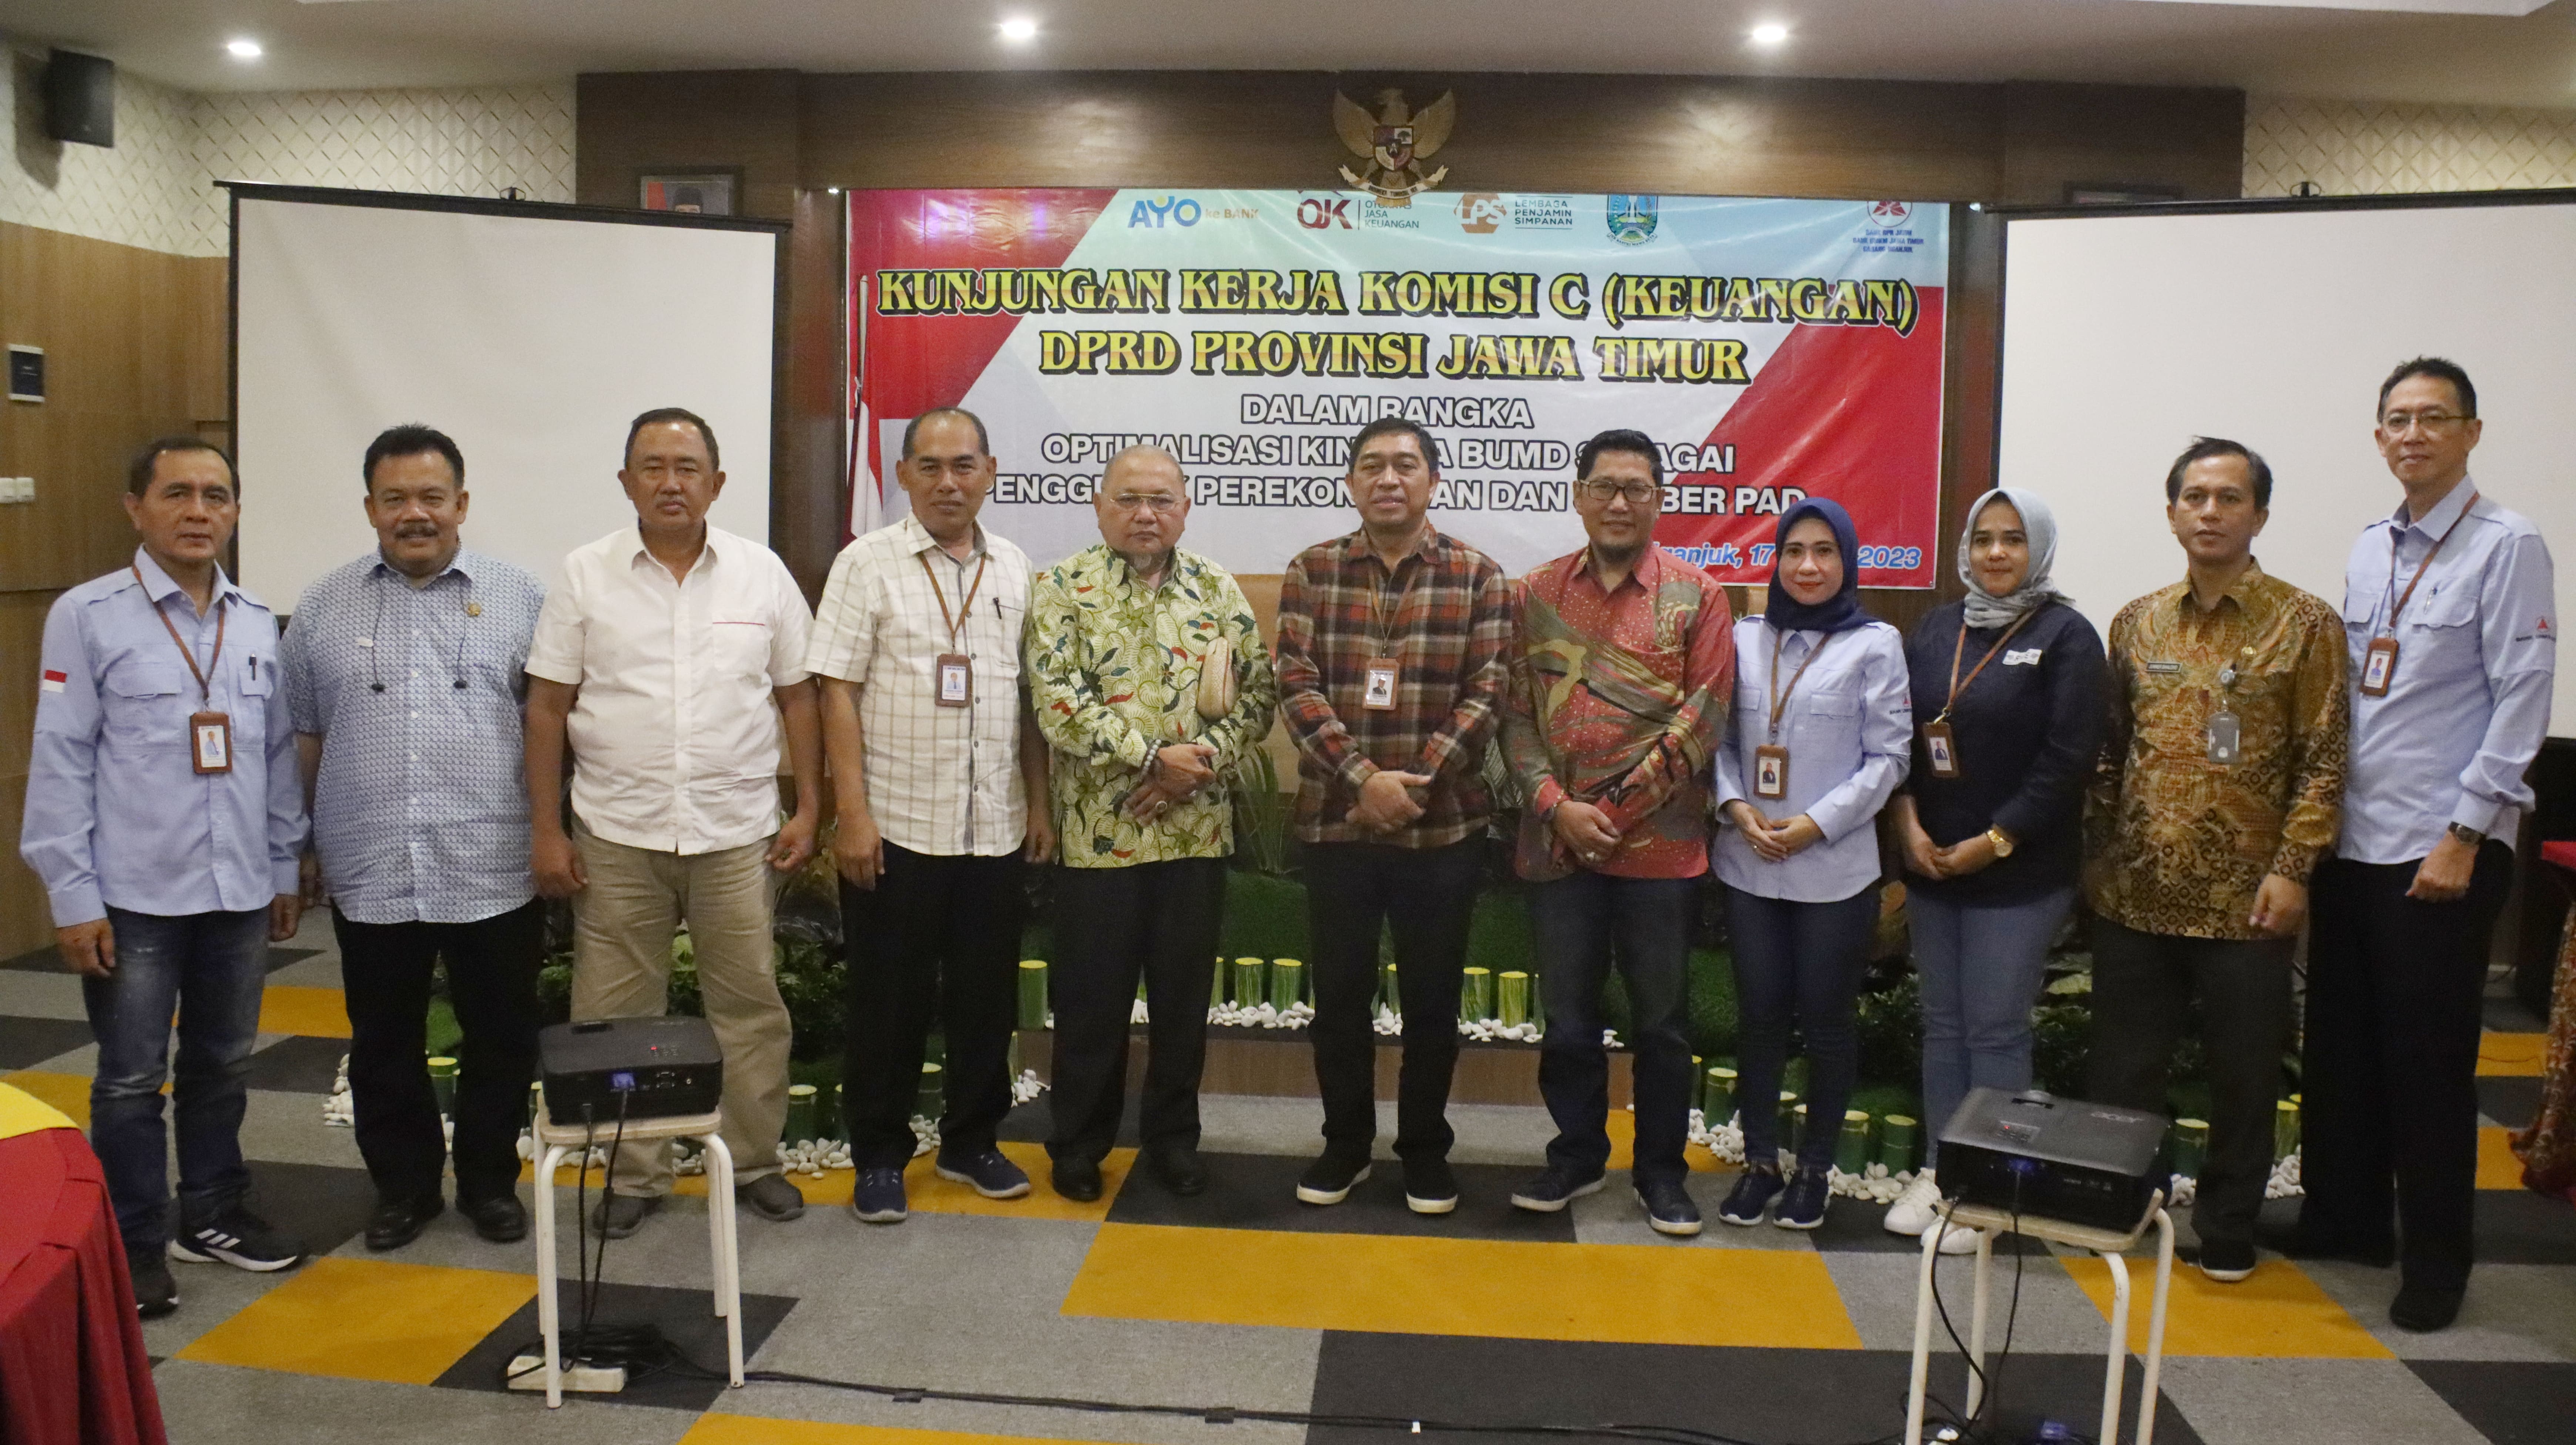 Anggota Komisi C DPRD Jawa Timur Kuswanto mendorong optimalisasi kinerja Badan Usaha Milik Daerah (BUMD) agar dapat menjadi  penggerak perekonomian dan sumber Pendapatan Asli Daerah (PAD).